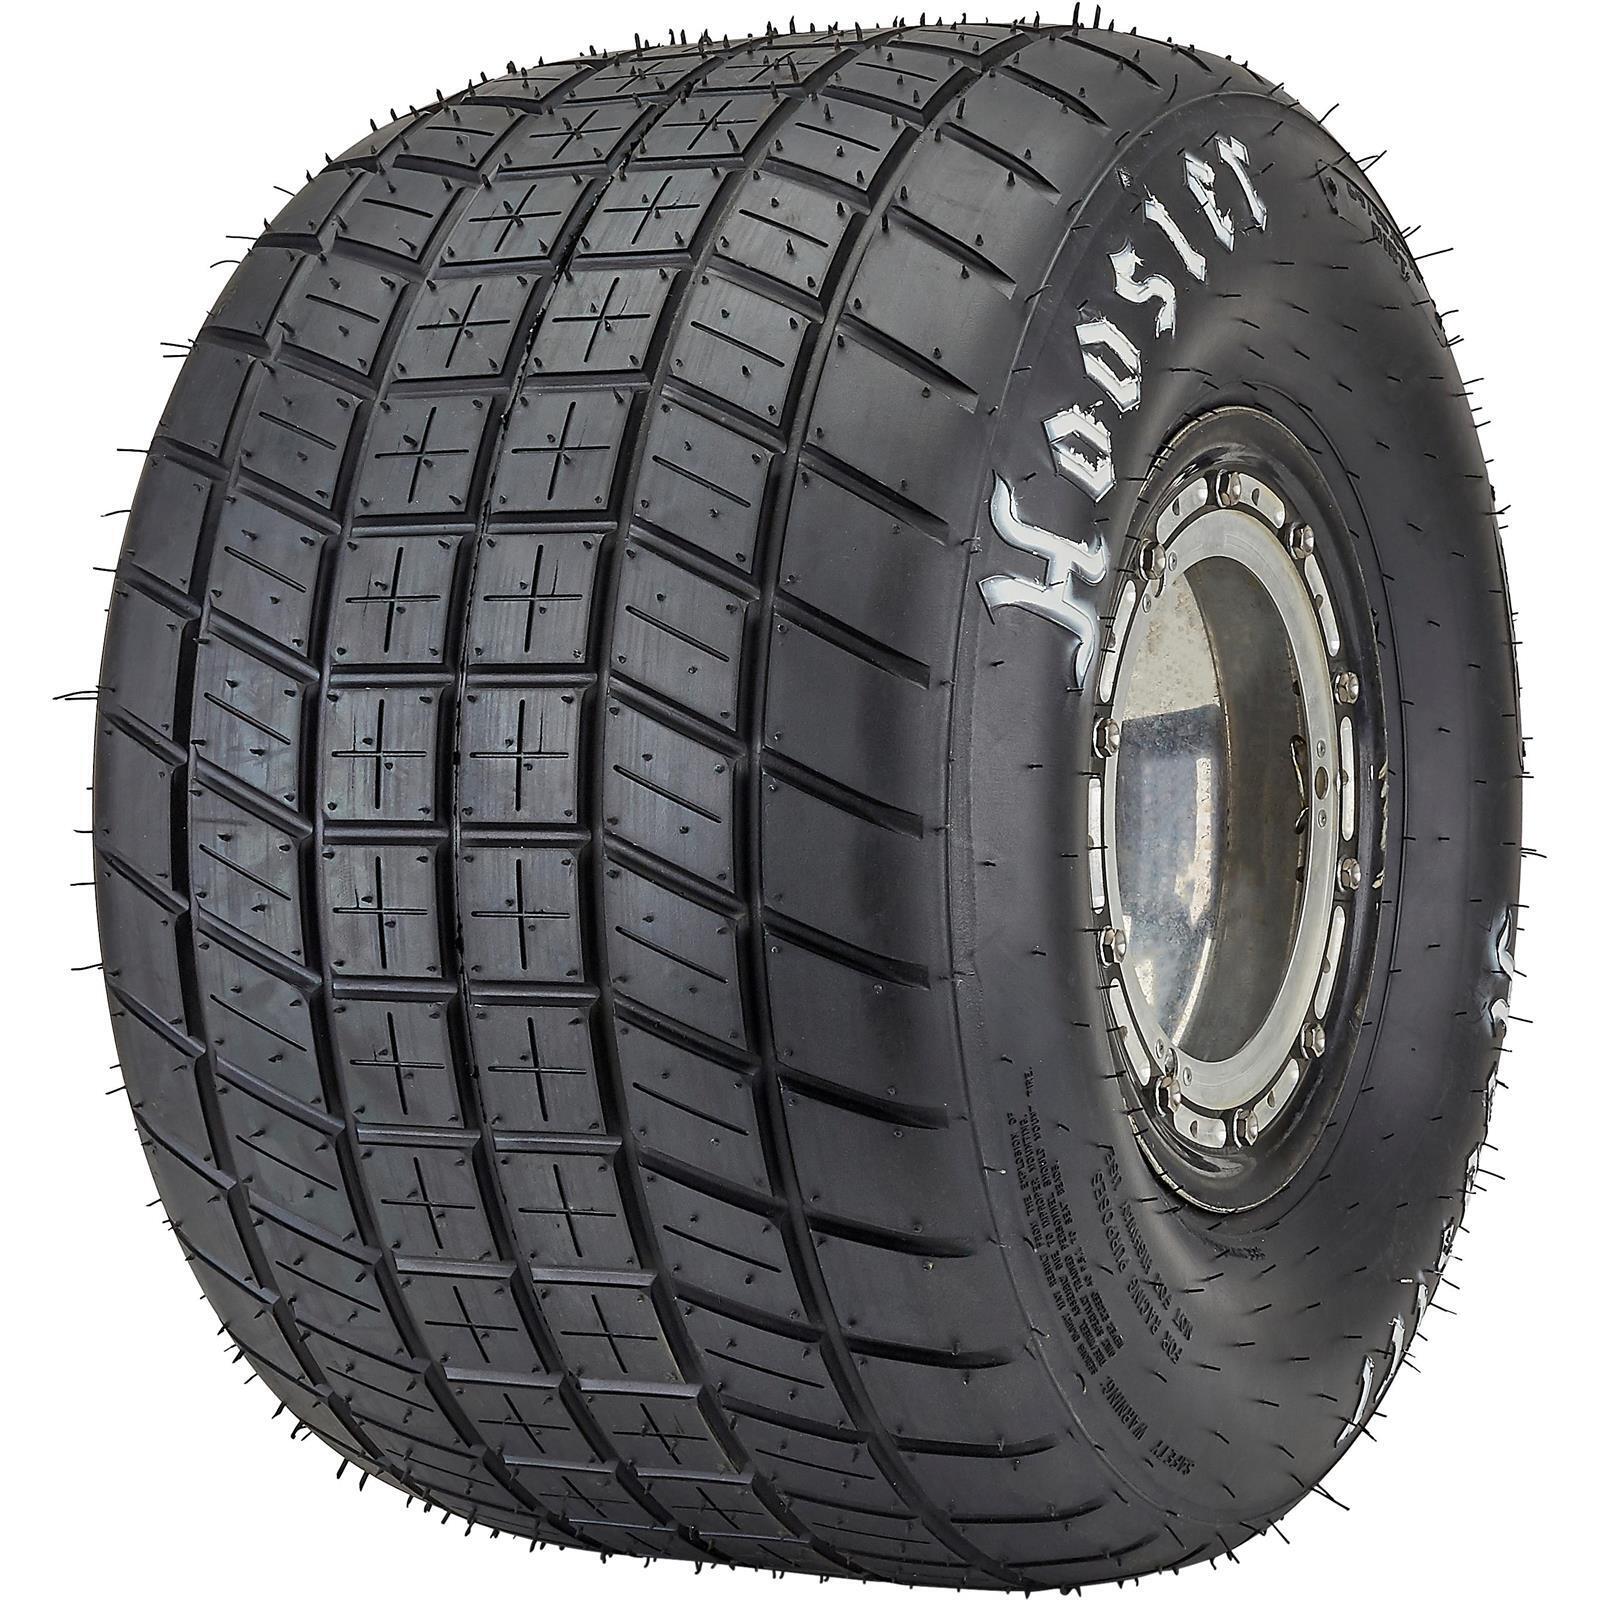 Hoosier 42237-RD20 Midget/Micro/Jr Sprint Tire, 69.0/10.0-10 RD20